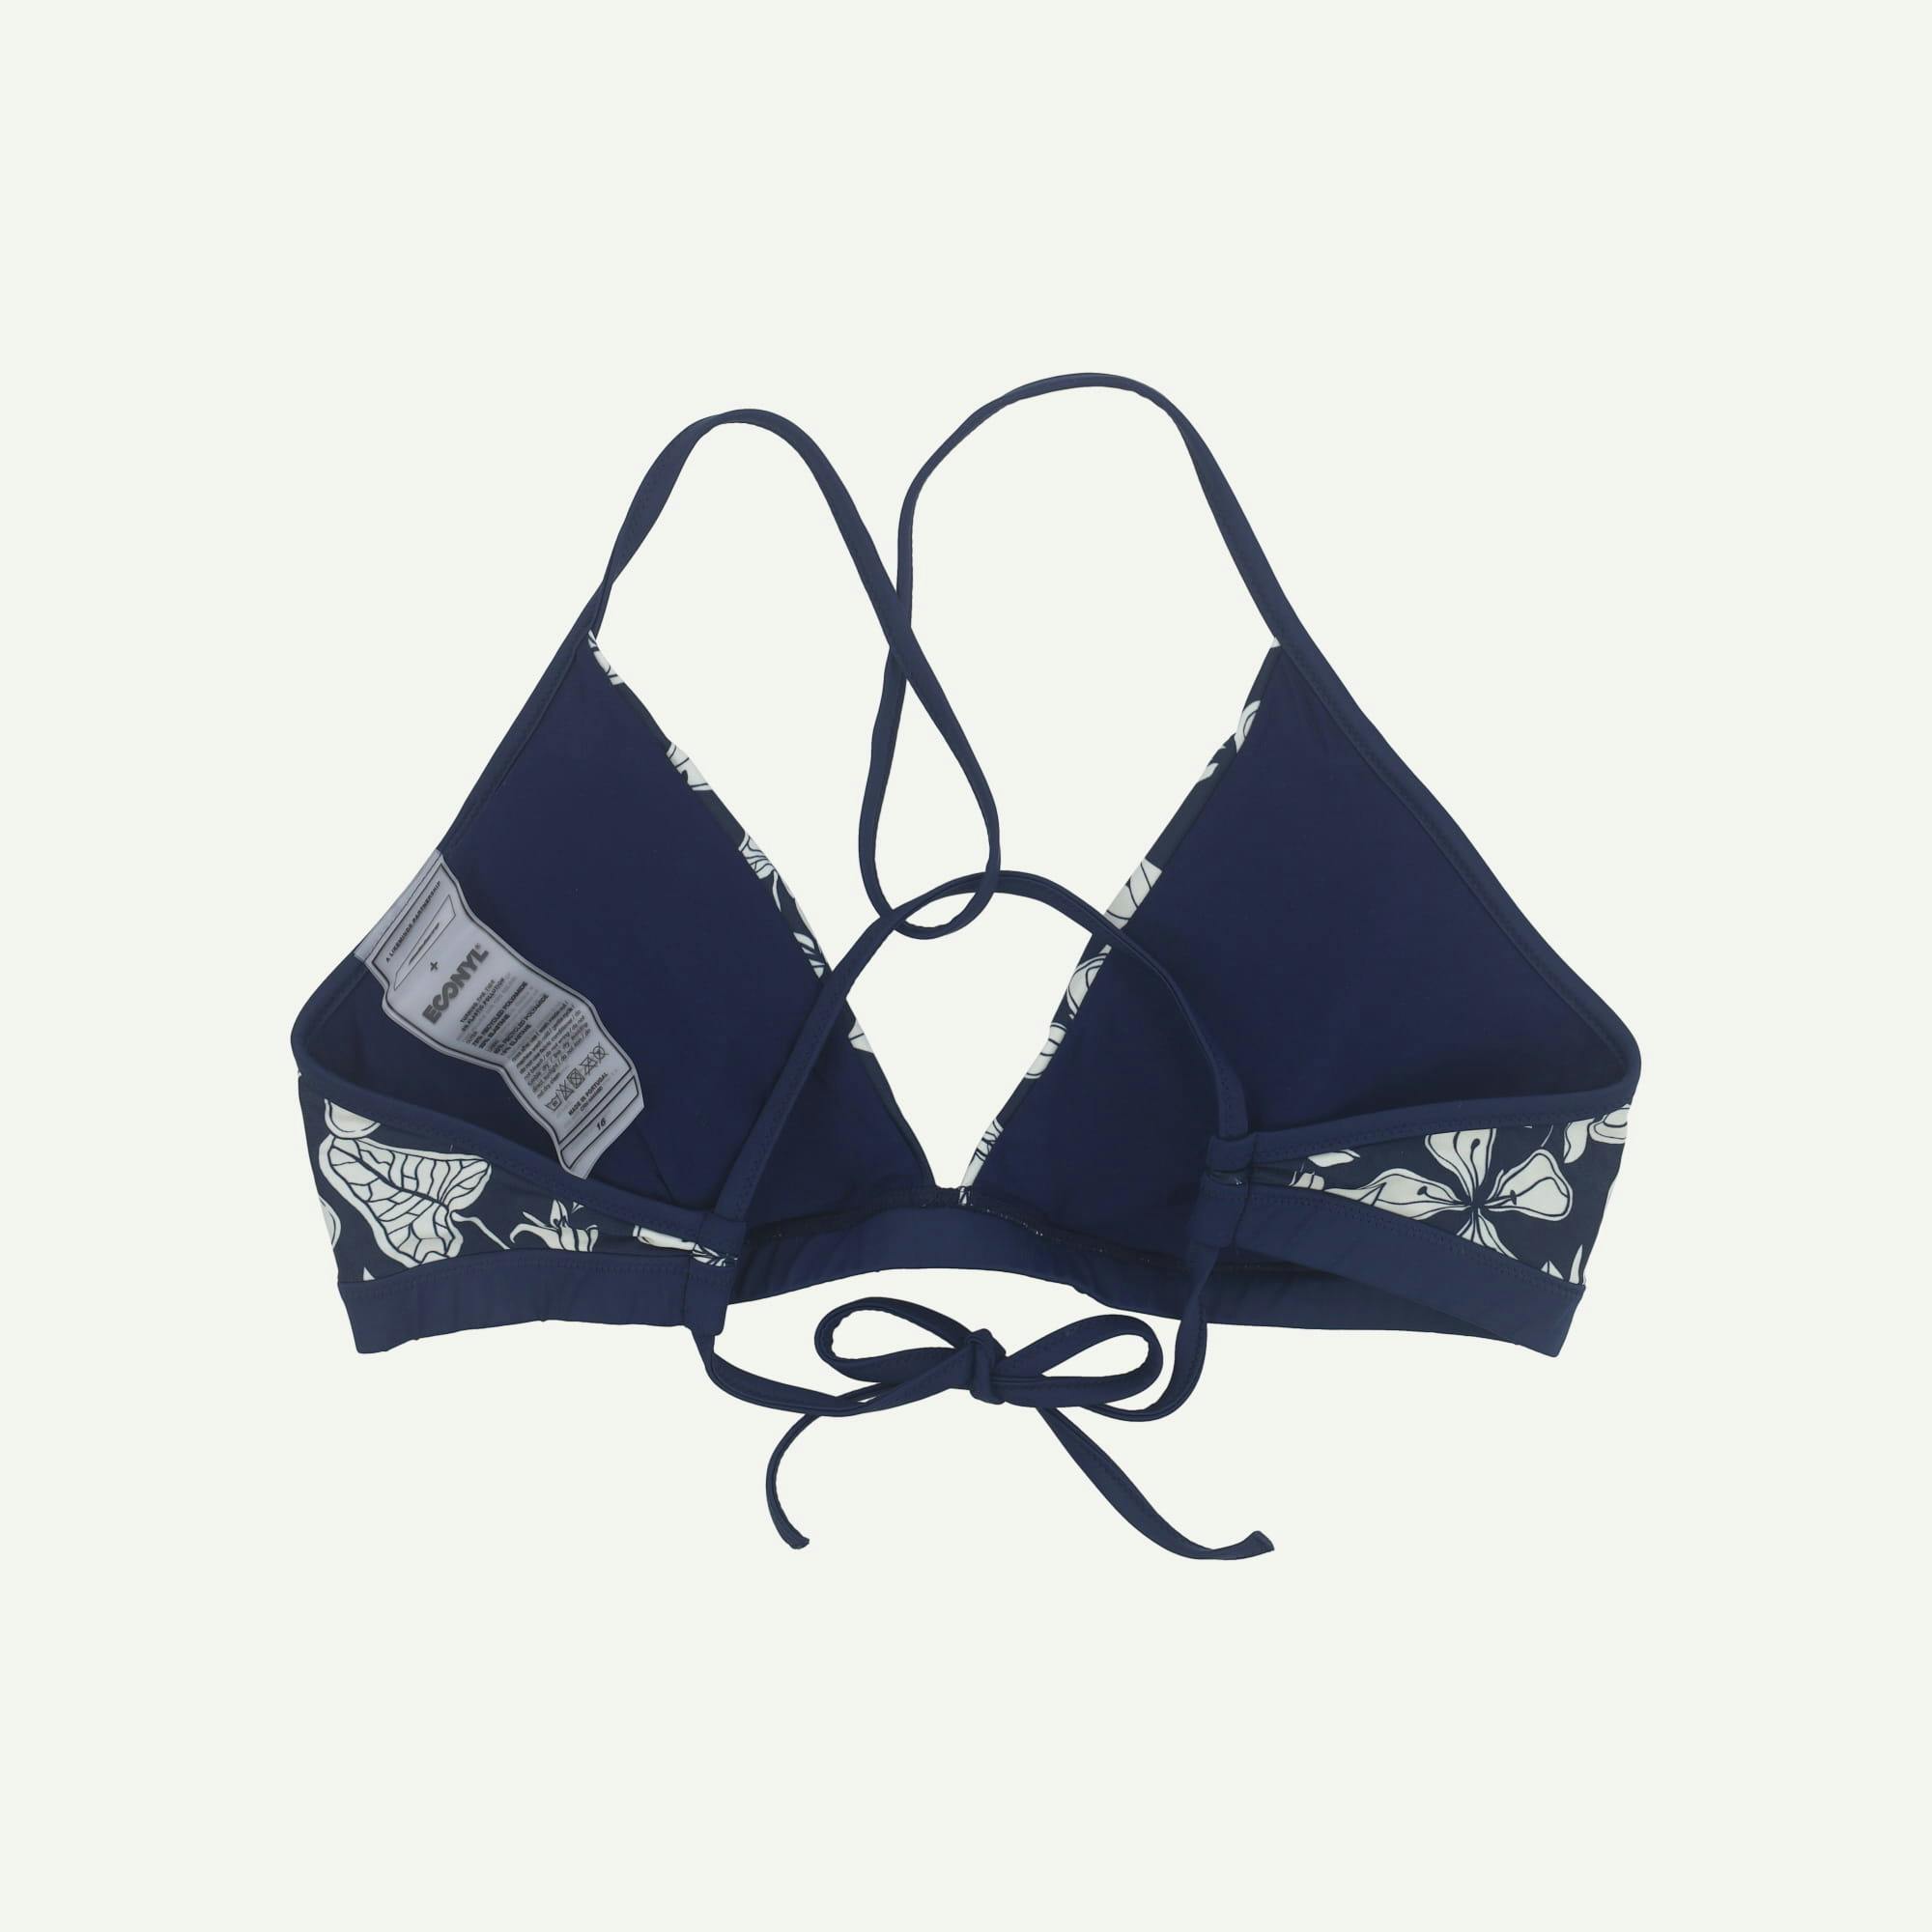 Finisterre Brand new Navy Zenith Triangle Bikini top